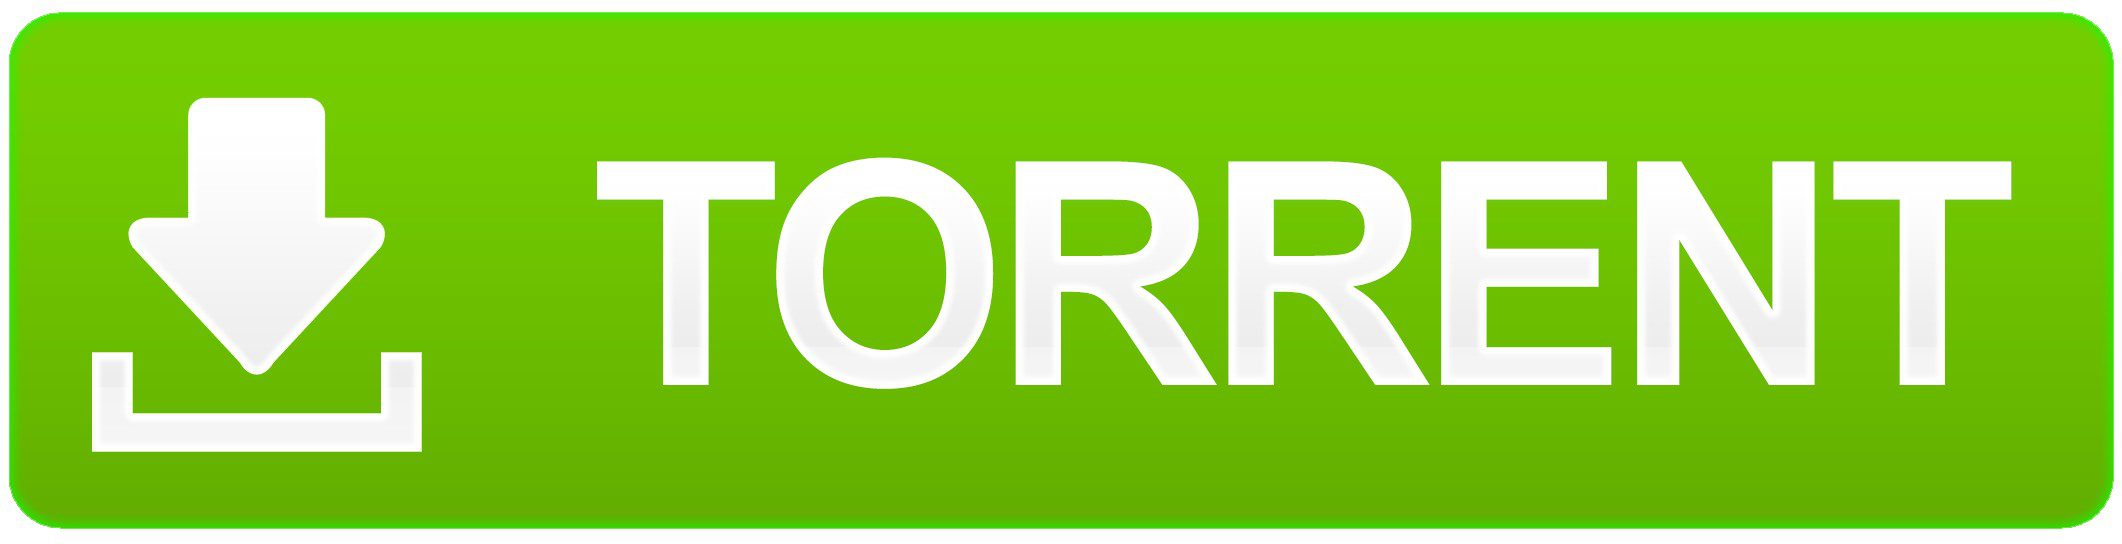 OVR Toolkit Free Download torrent